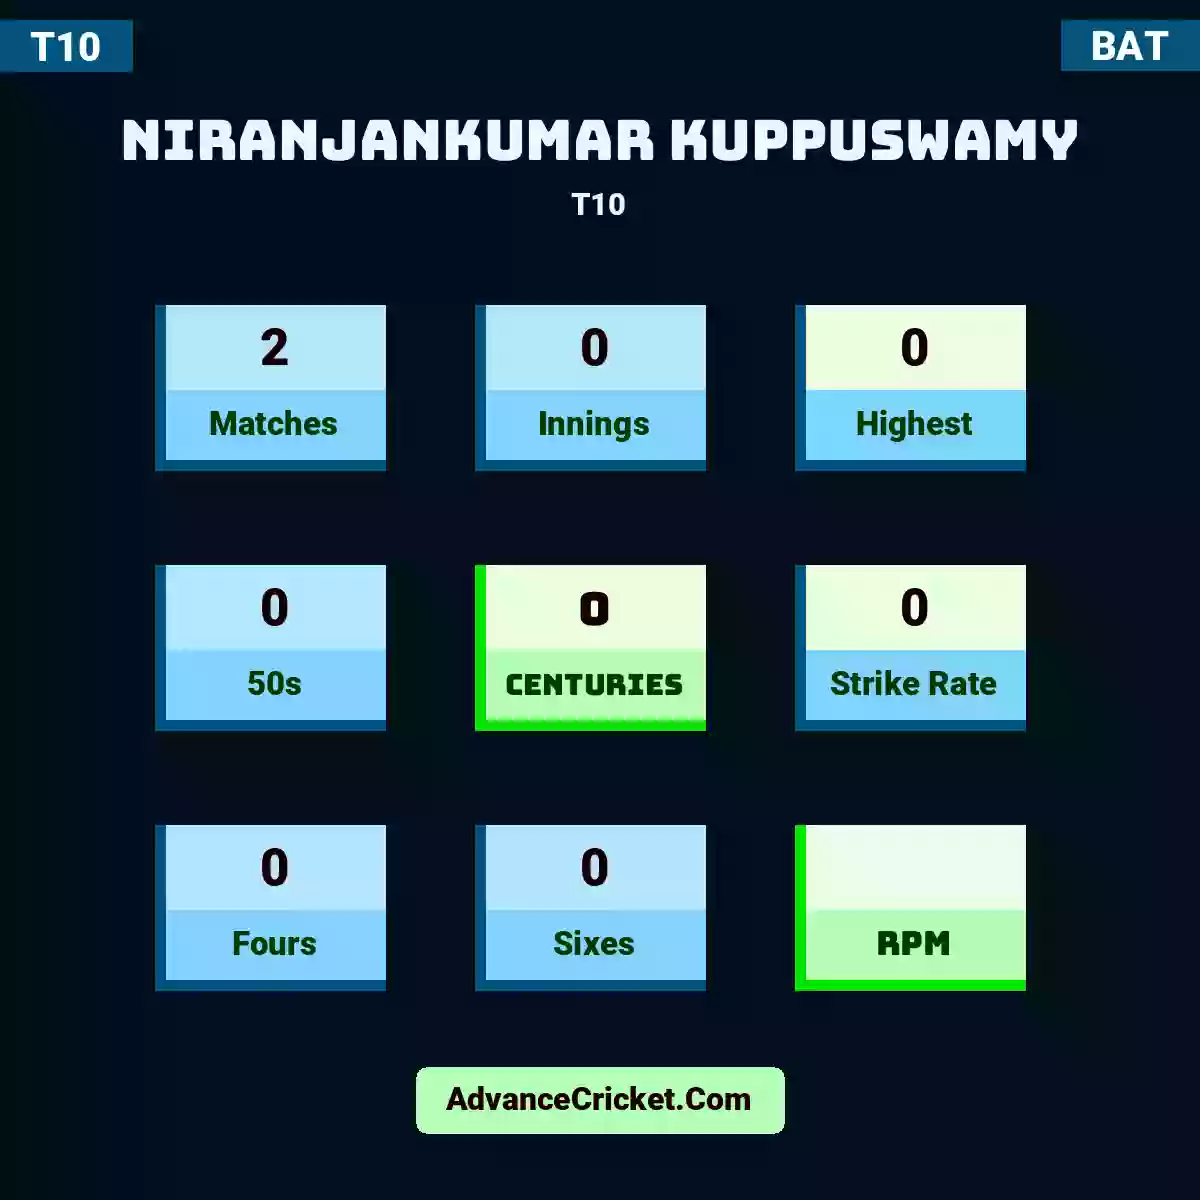 Niranjankumar Kuppuswamy T10 , Niranjankumar Kuppuswamy played 2 matches, scored 0 runs as highest, 0 half-centuries, and 0 centuries, with a strike rate of 0. N.Kuppuswamy hit 0 fours and 0 sixes.